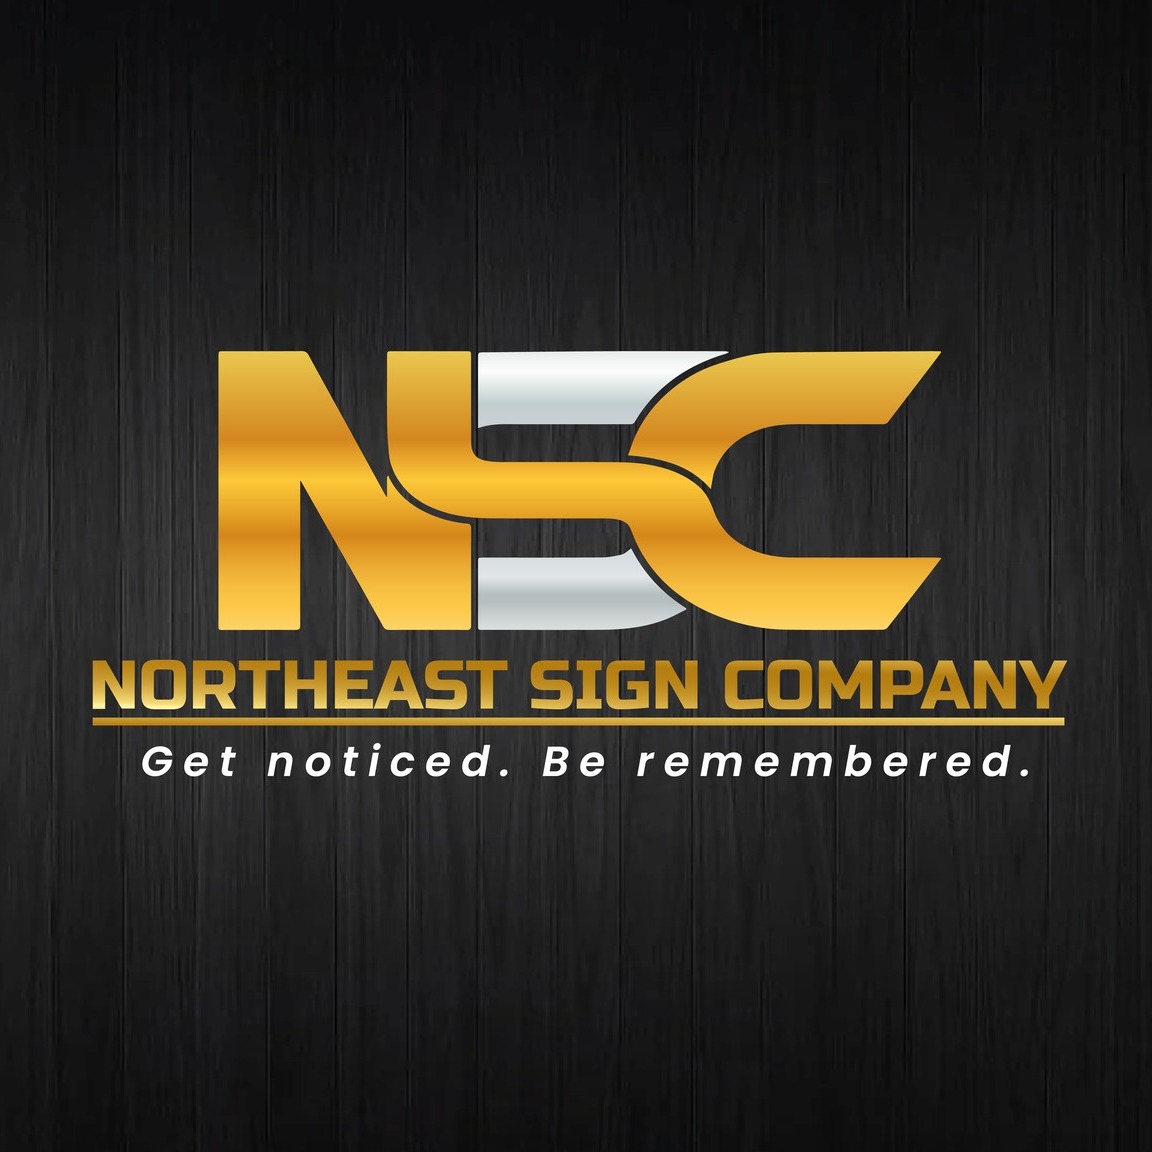 Company logo of Northeast Sign Company